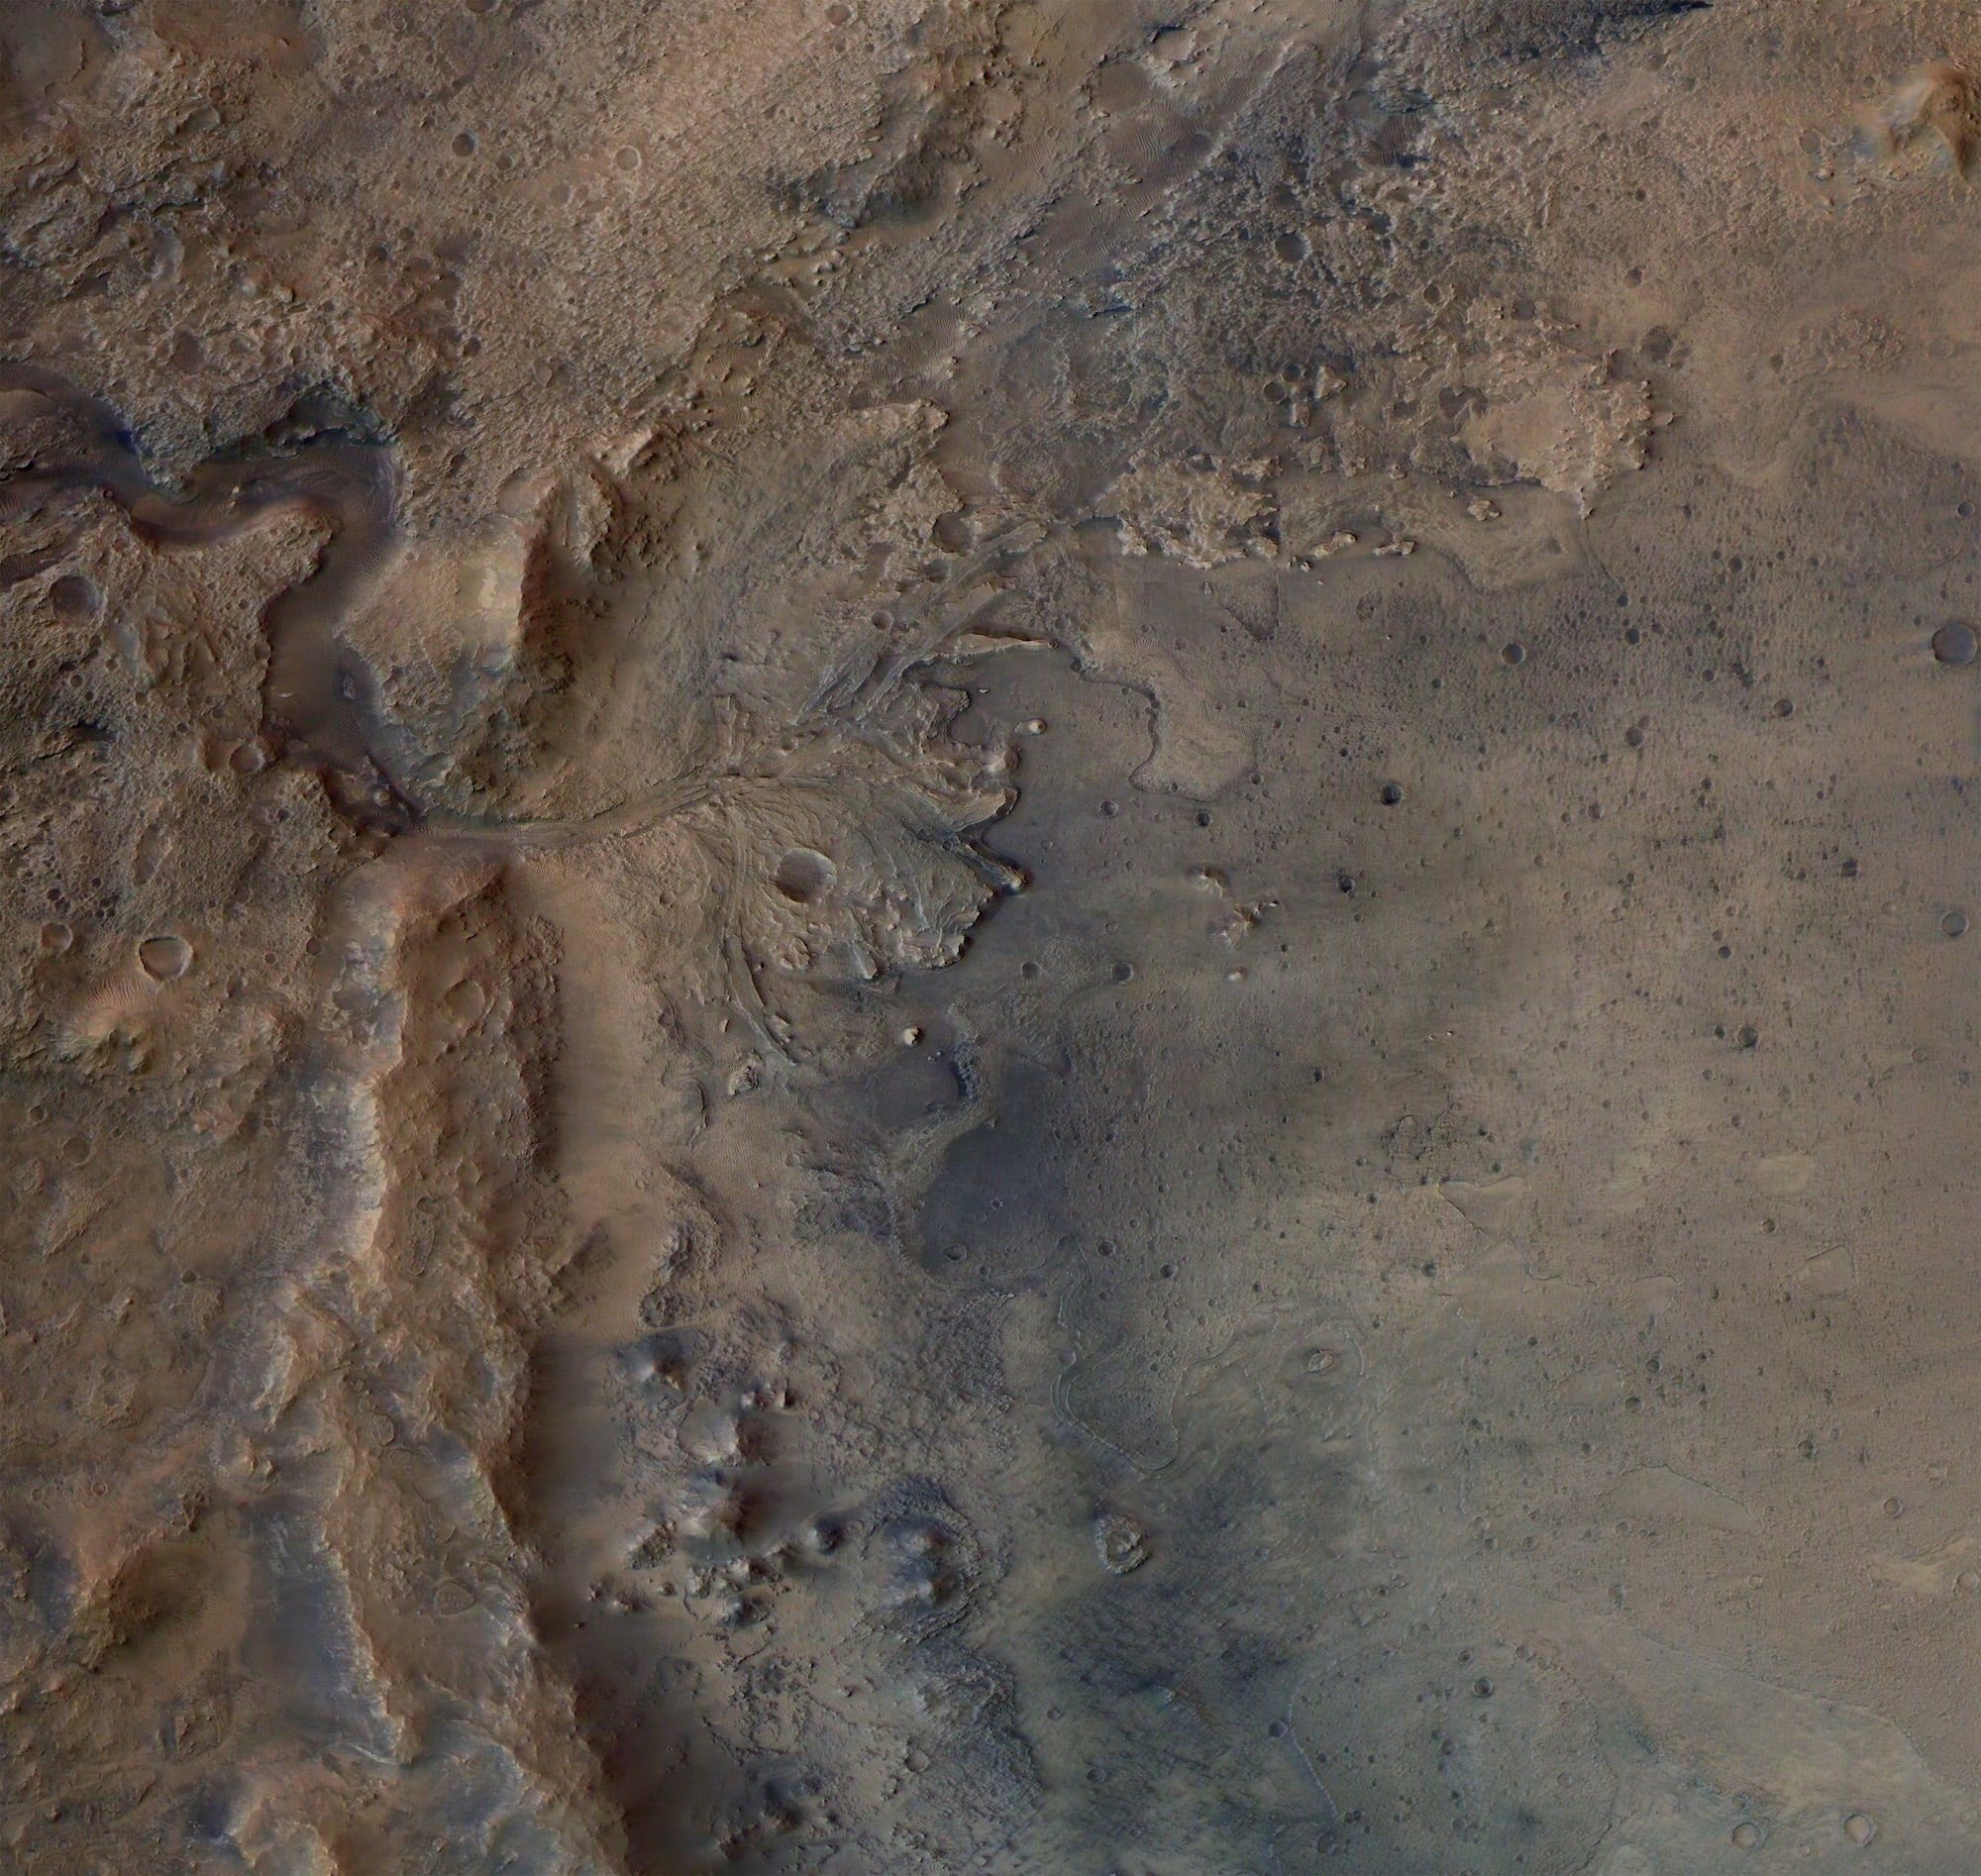 Jezero-Krater-Fluss-Delta-Mars-Perseverance-Rover-Landeplatz